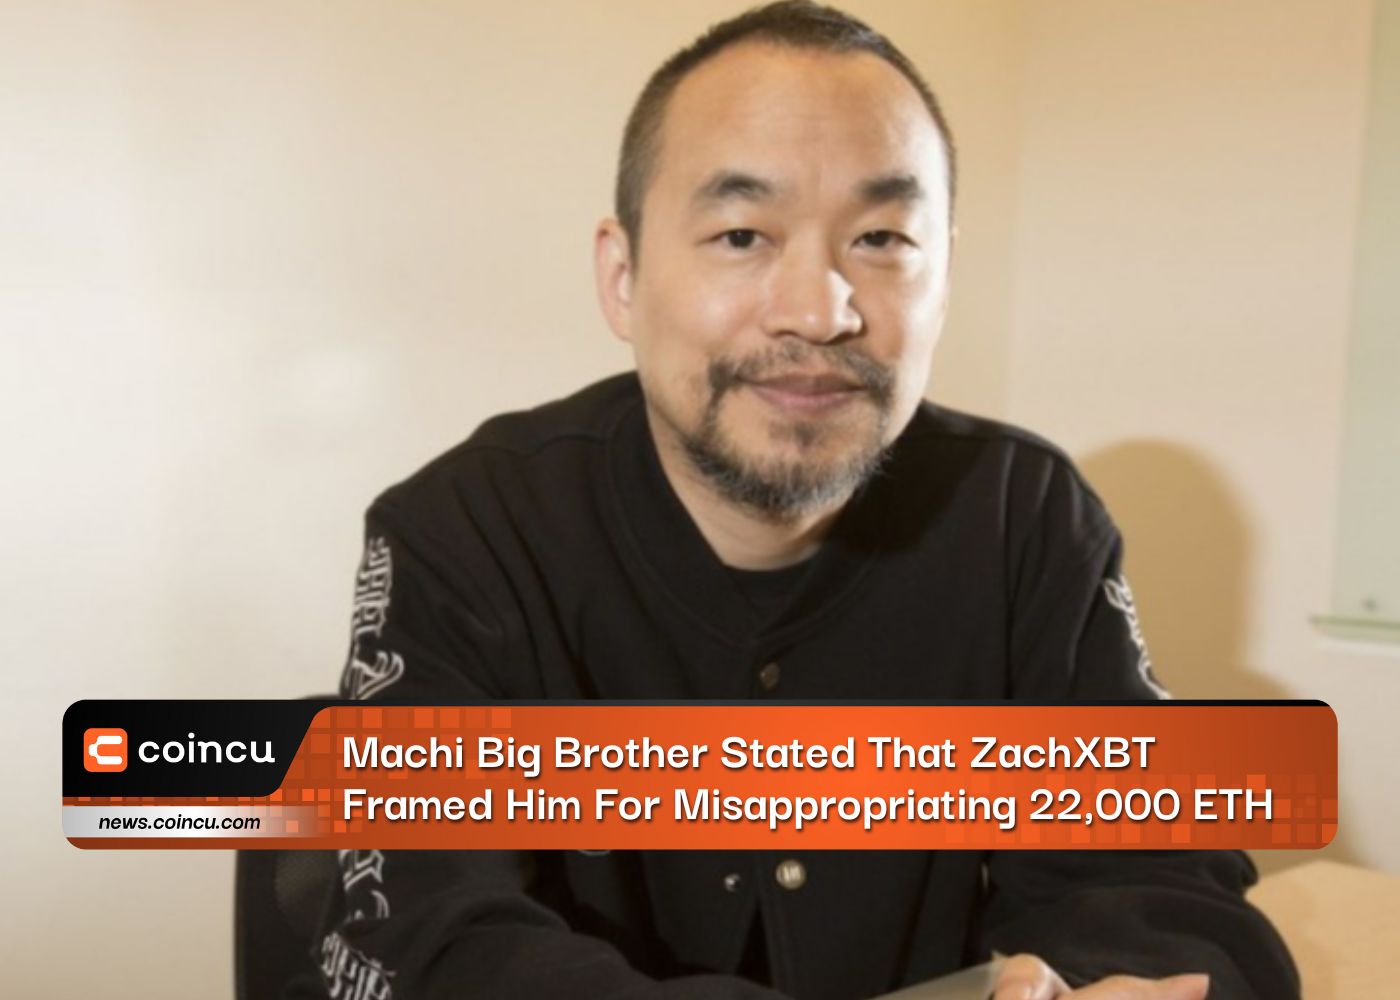 Machi Big Brother는 ZachXBT가 22,000 ETH를 횡령한 것으로 그를 모함했다고 말했습니다.